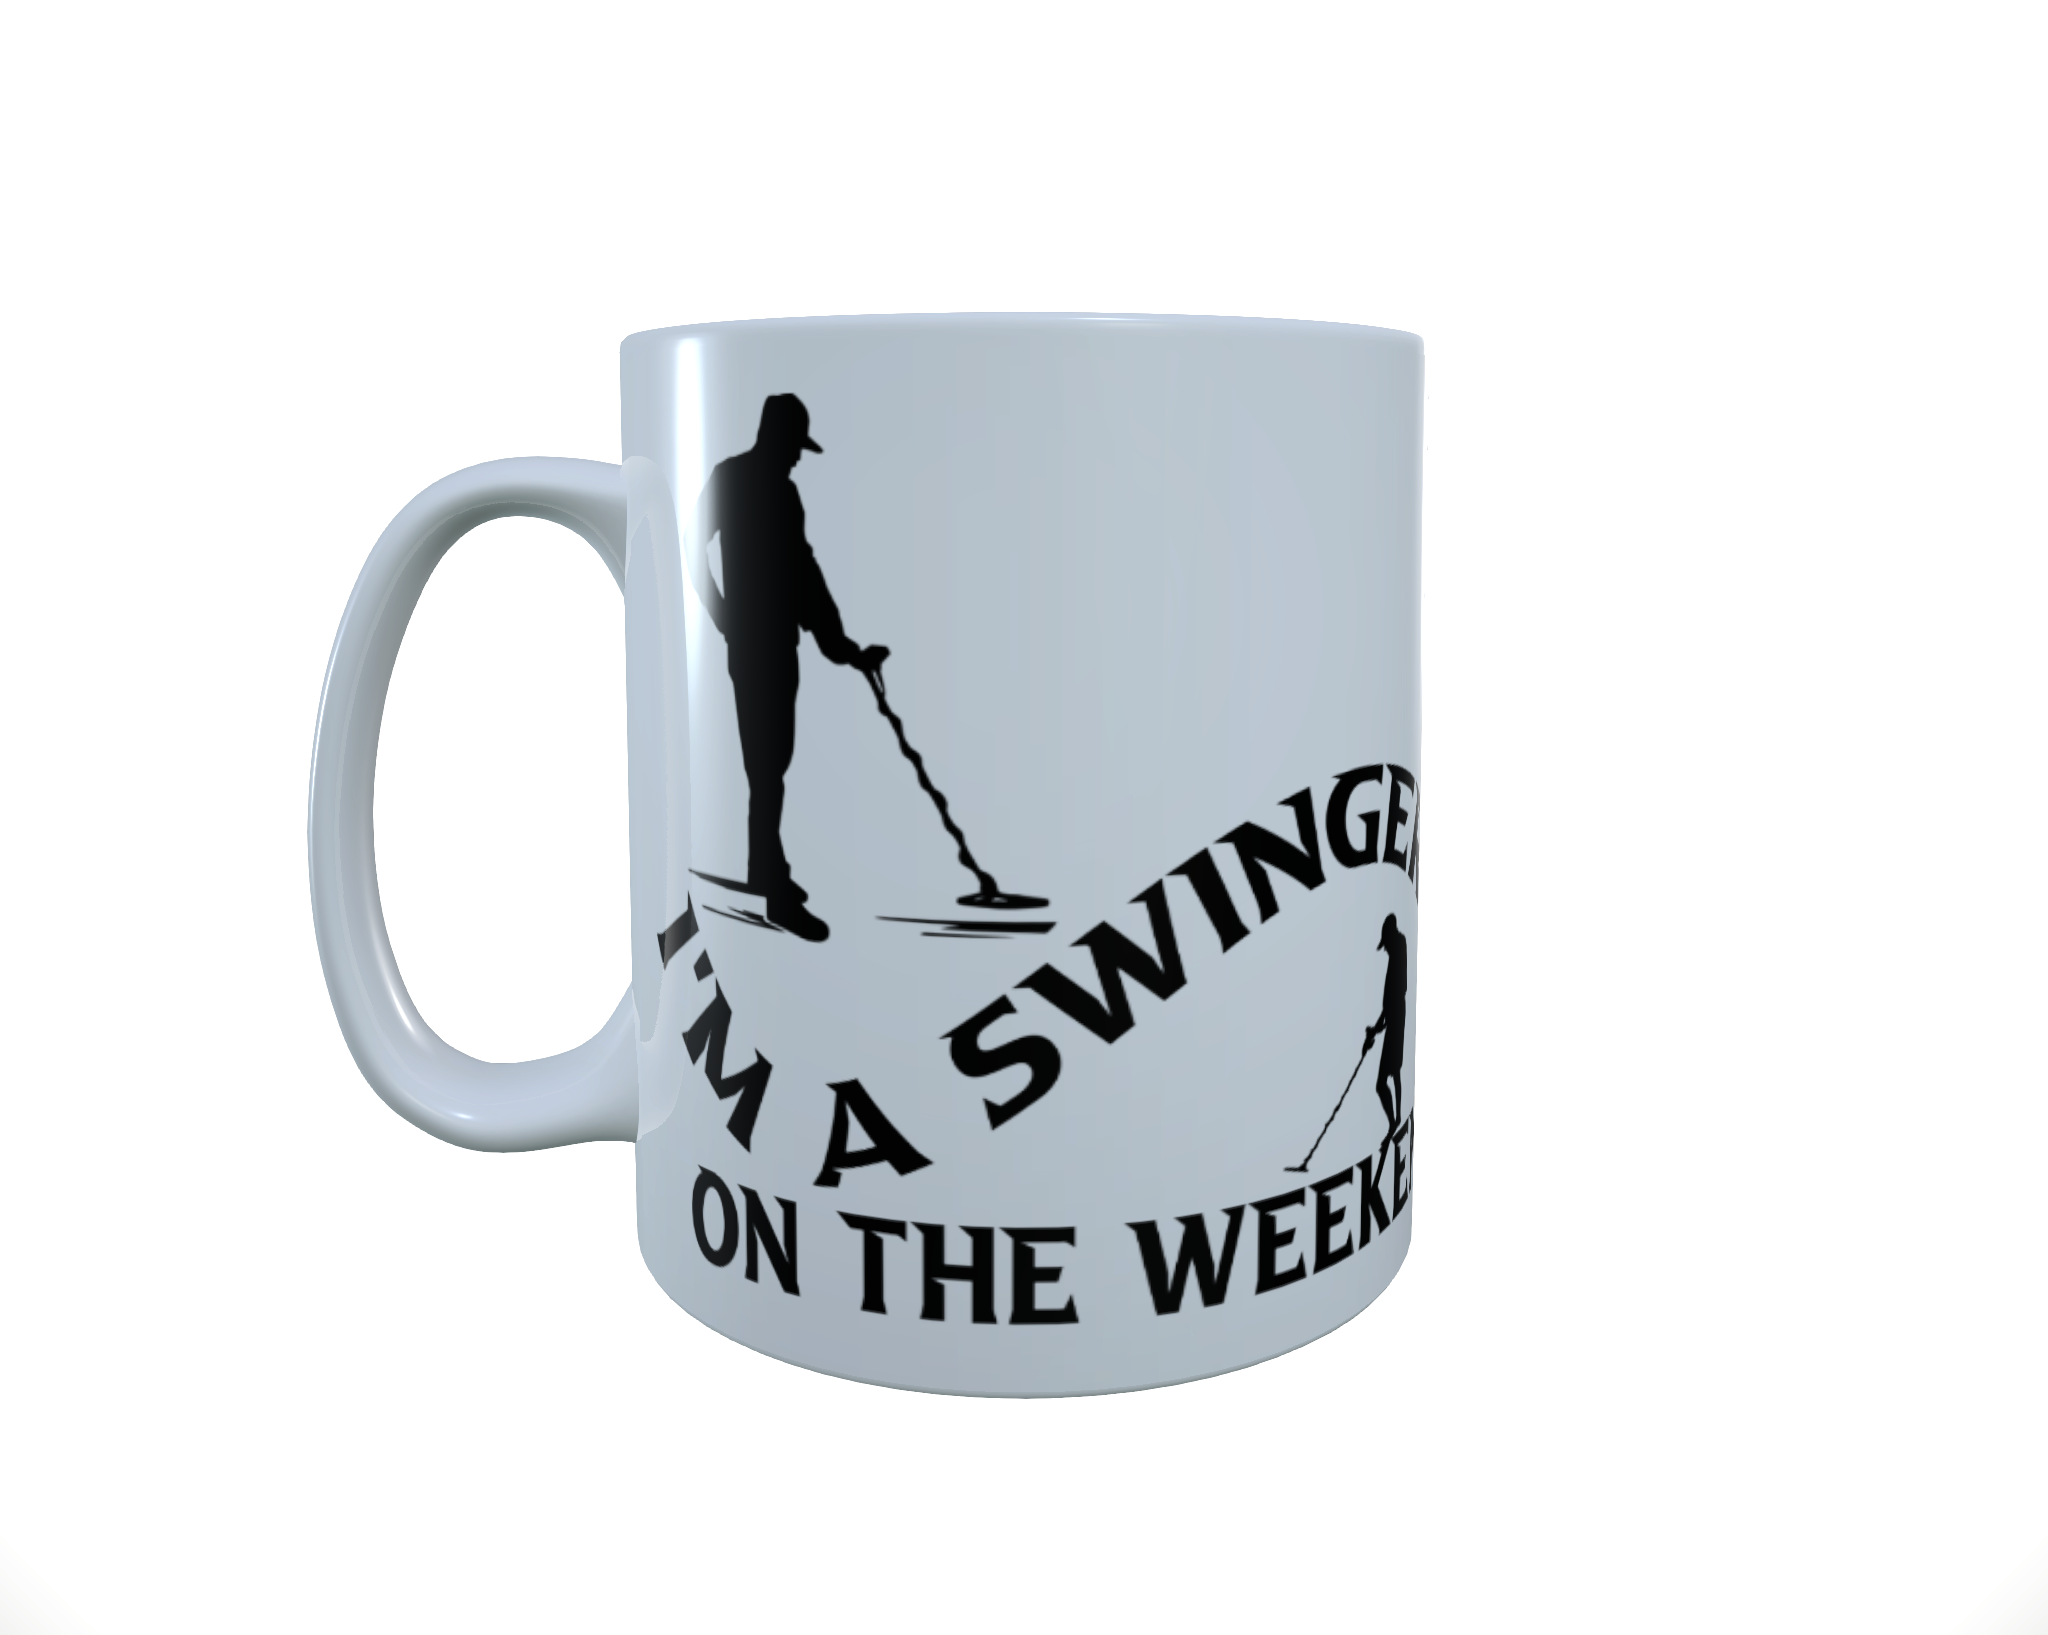 I'm A Swinger On The Weekend Ceramic Mug, Funny Quote Mug